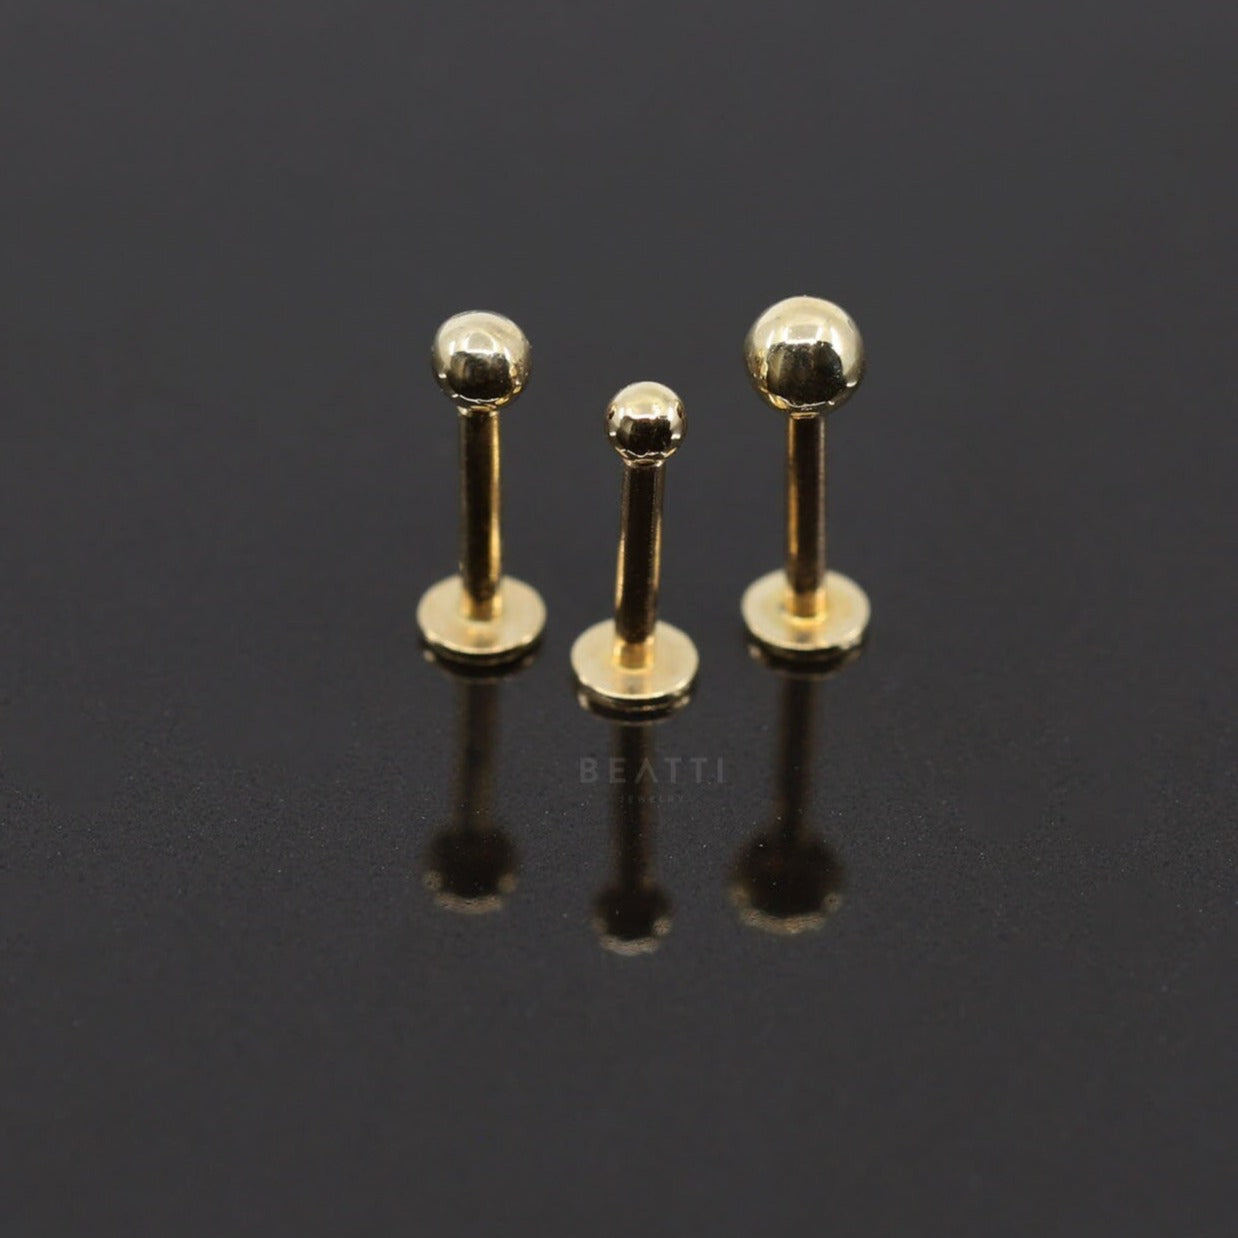 NEW  18G   Tiny 2mm-2.5mm-3mm 14K Solid Gold Ball Labret, Simple Ball Labret, 14k Internally Threaded Labret, 14K Solid Rose Gold Labret - BEATTI